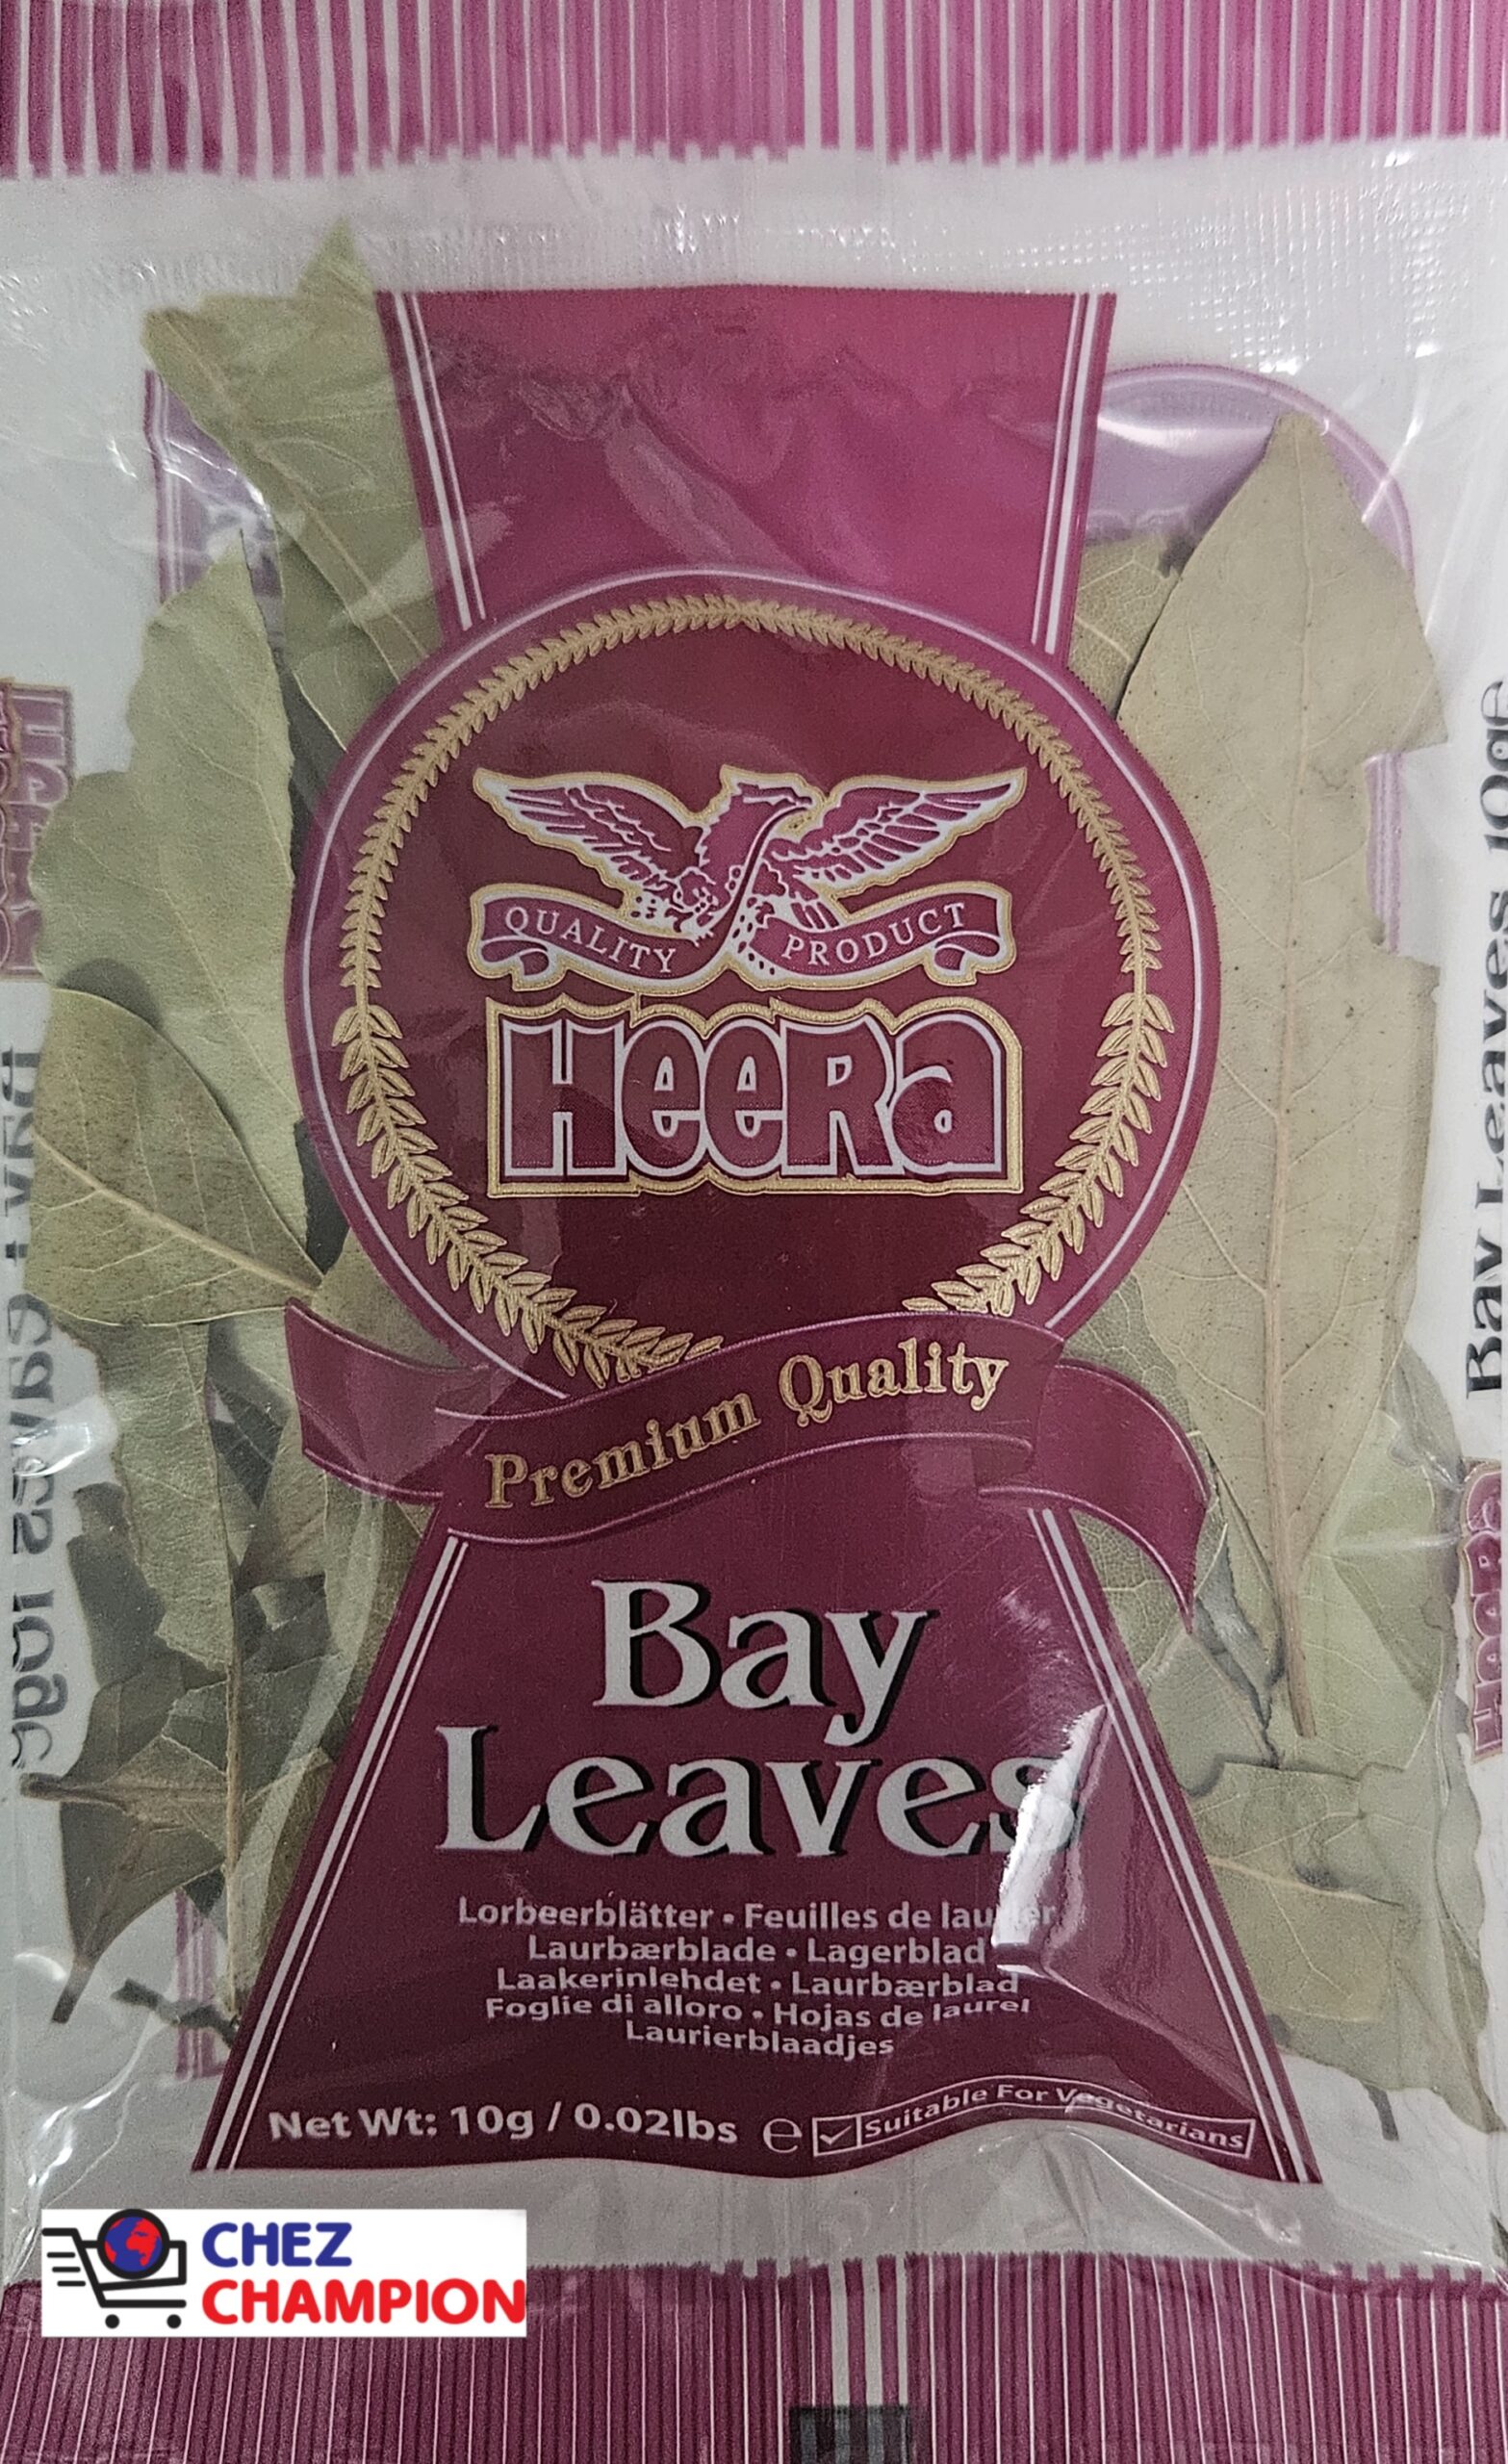 Heera bay leaves – feuille de laurier séchée – getrockenete Lorbeerblätter – 10g